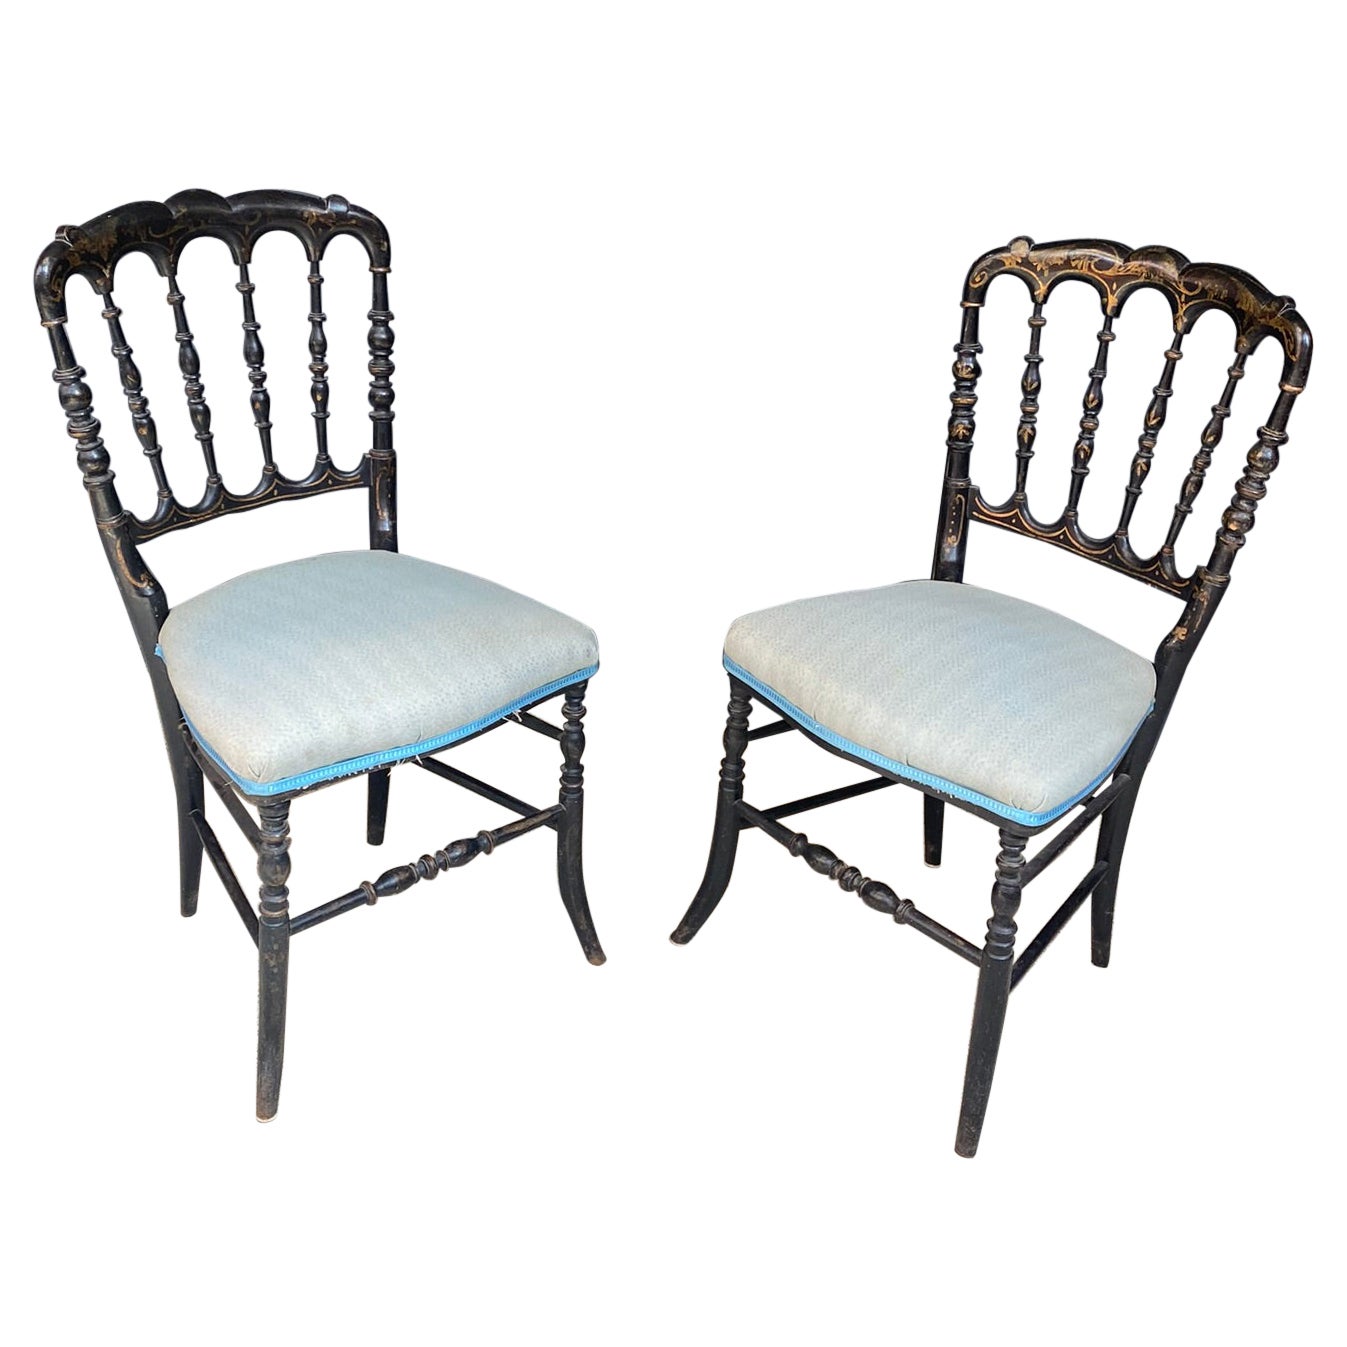 2 Original Chiarivari Napoleon III Ebonized Chairs, France, 1850s